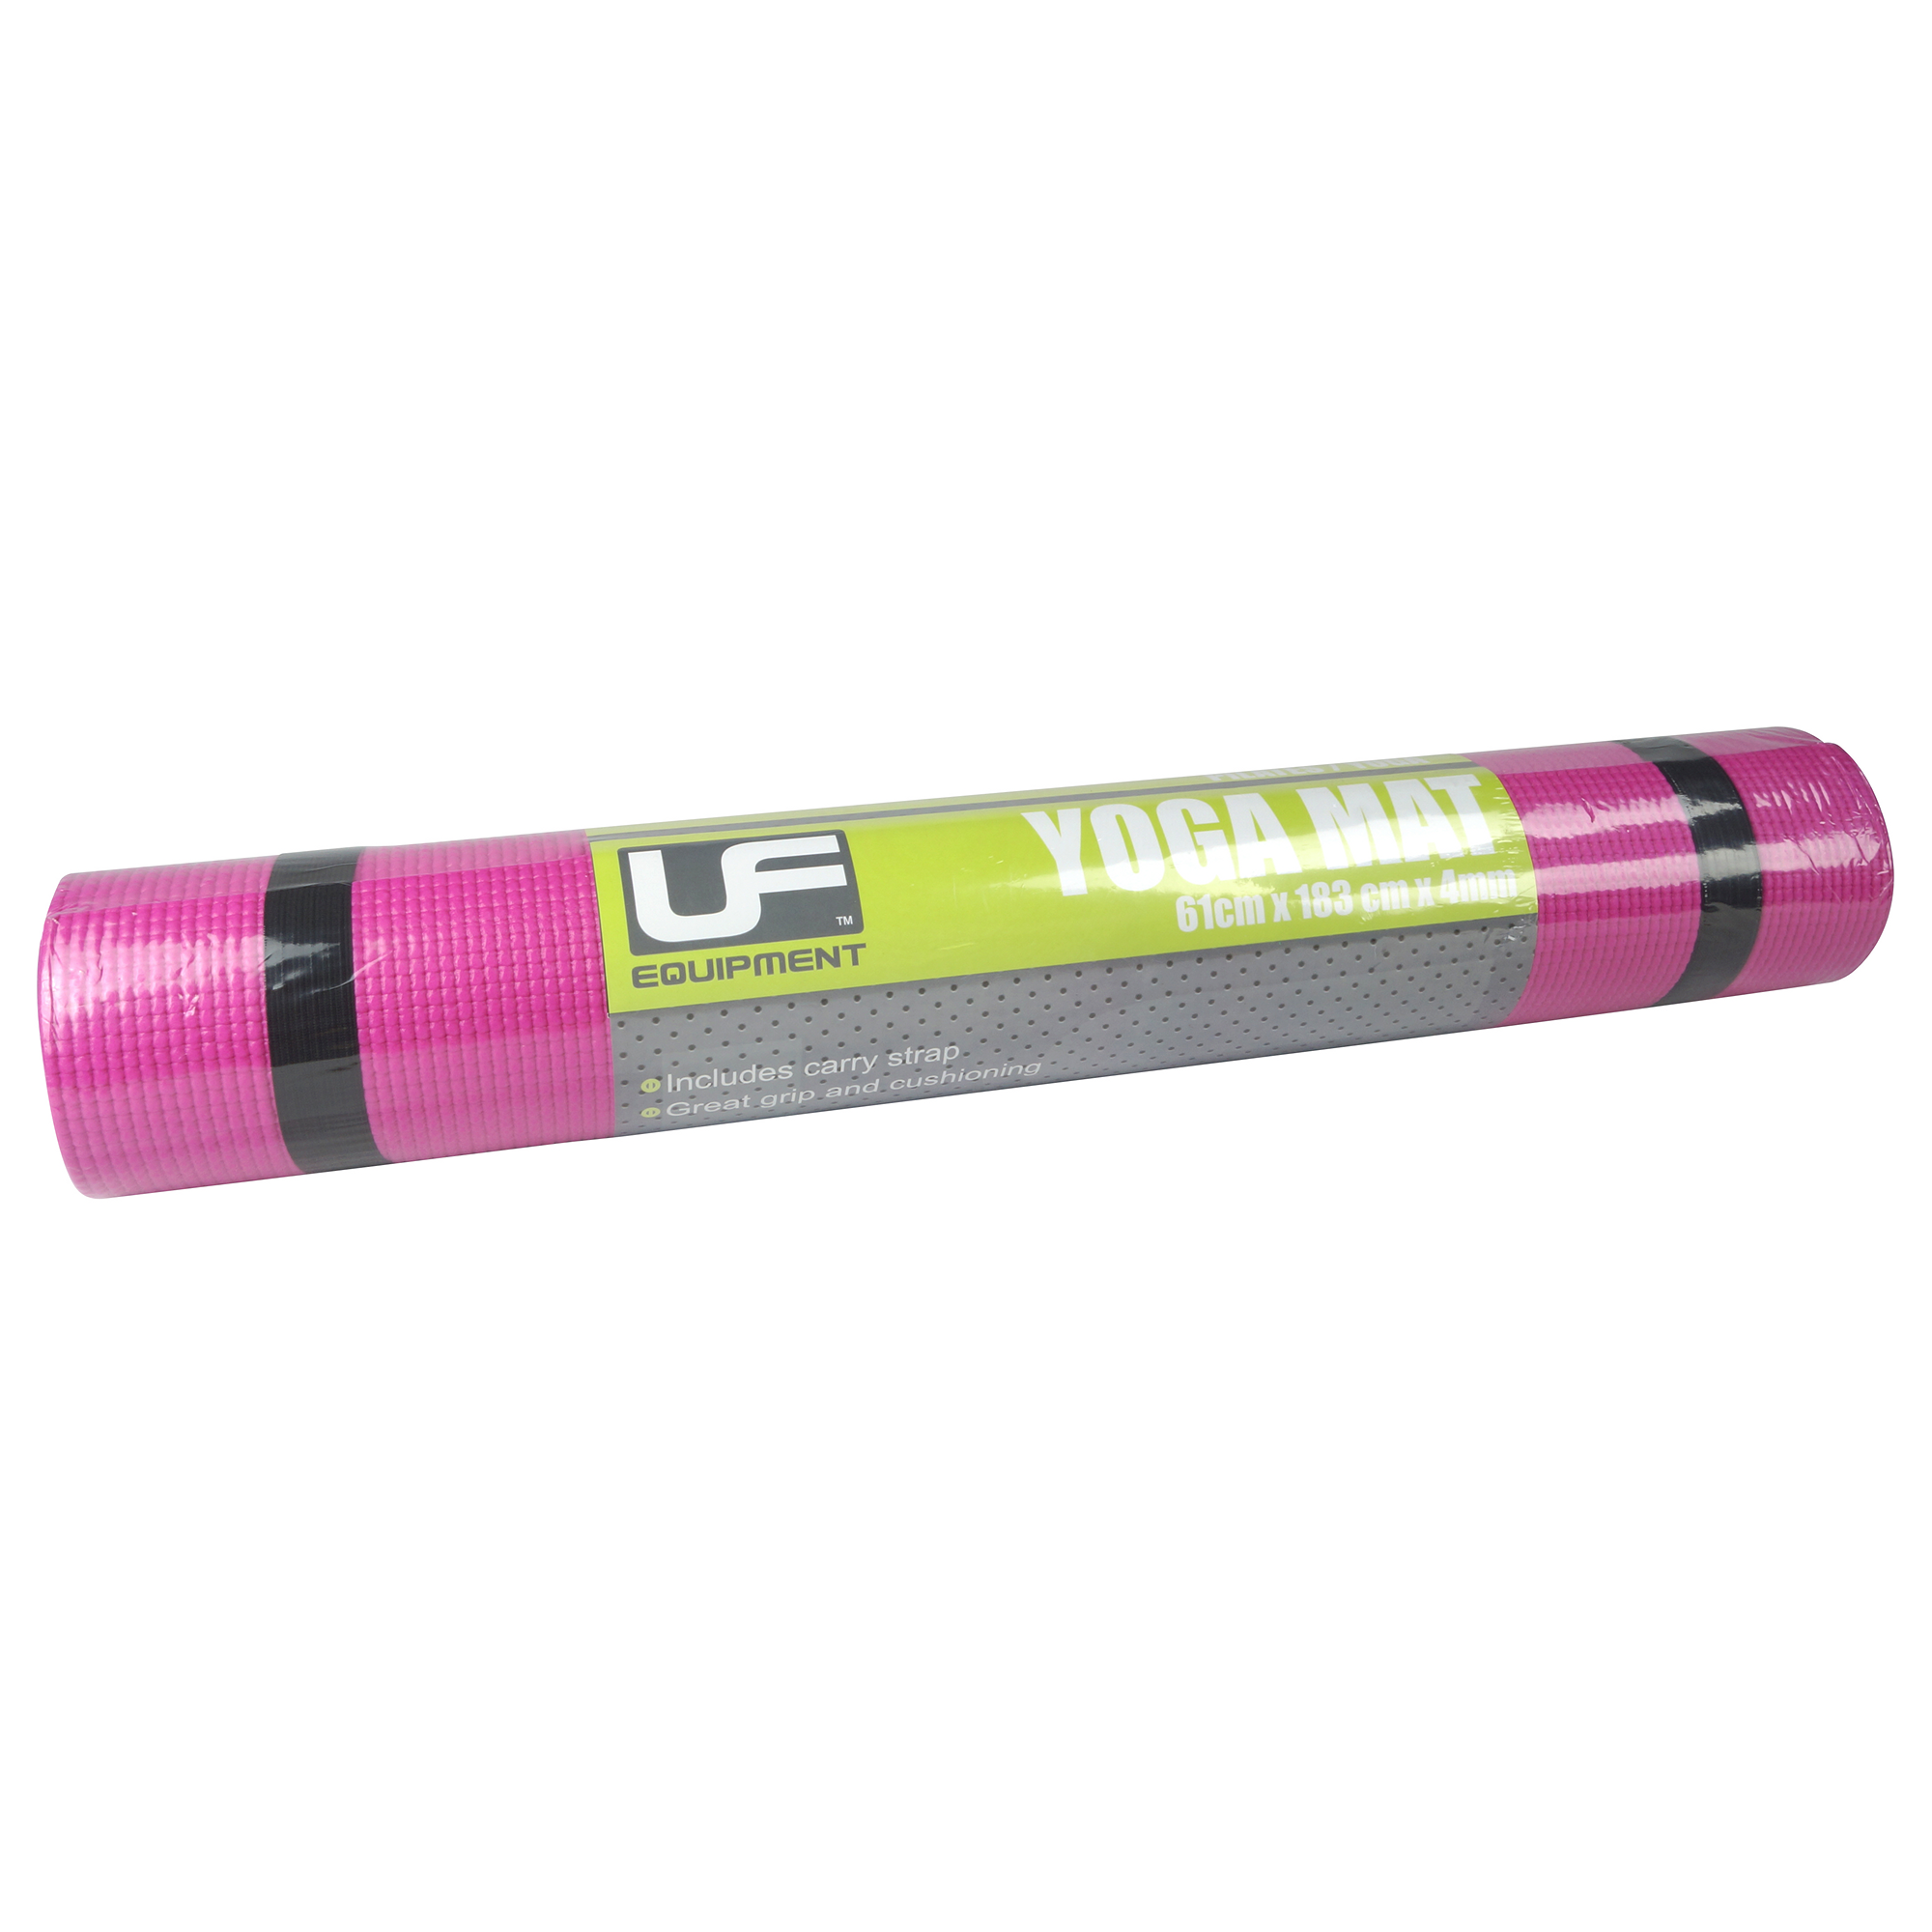 Ufe 4mm Yoga Mat Pink 183mm X61mm X4mm